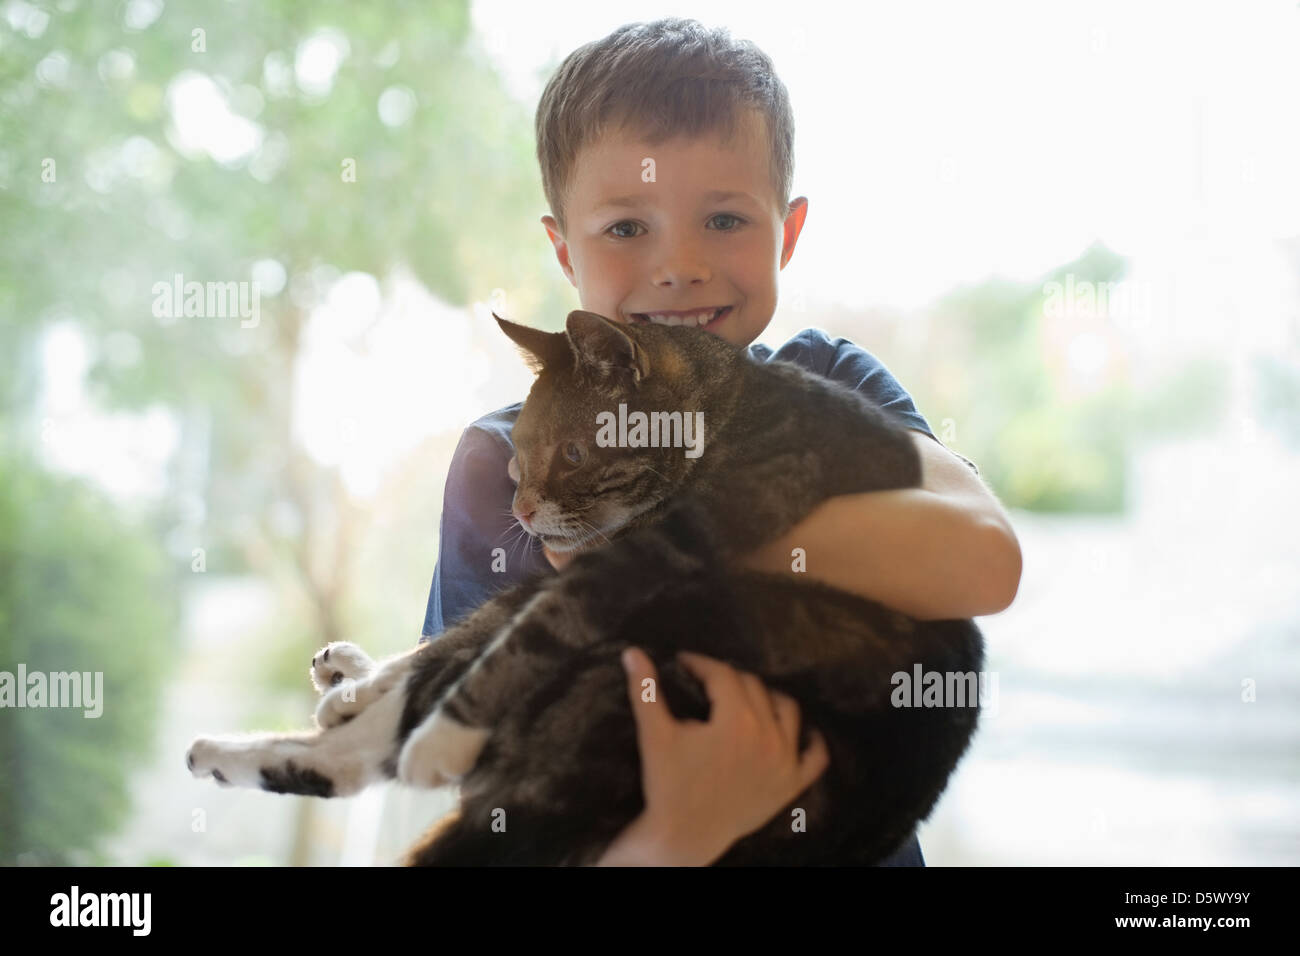 Smiling boy holding cat indoors Stock Photo